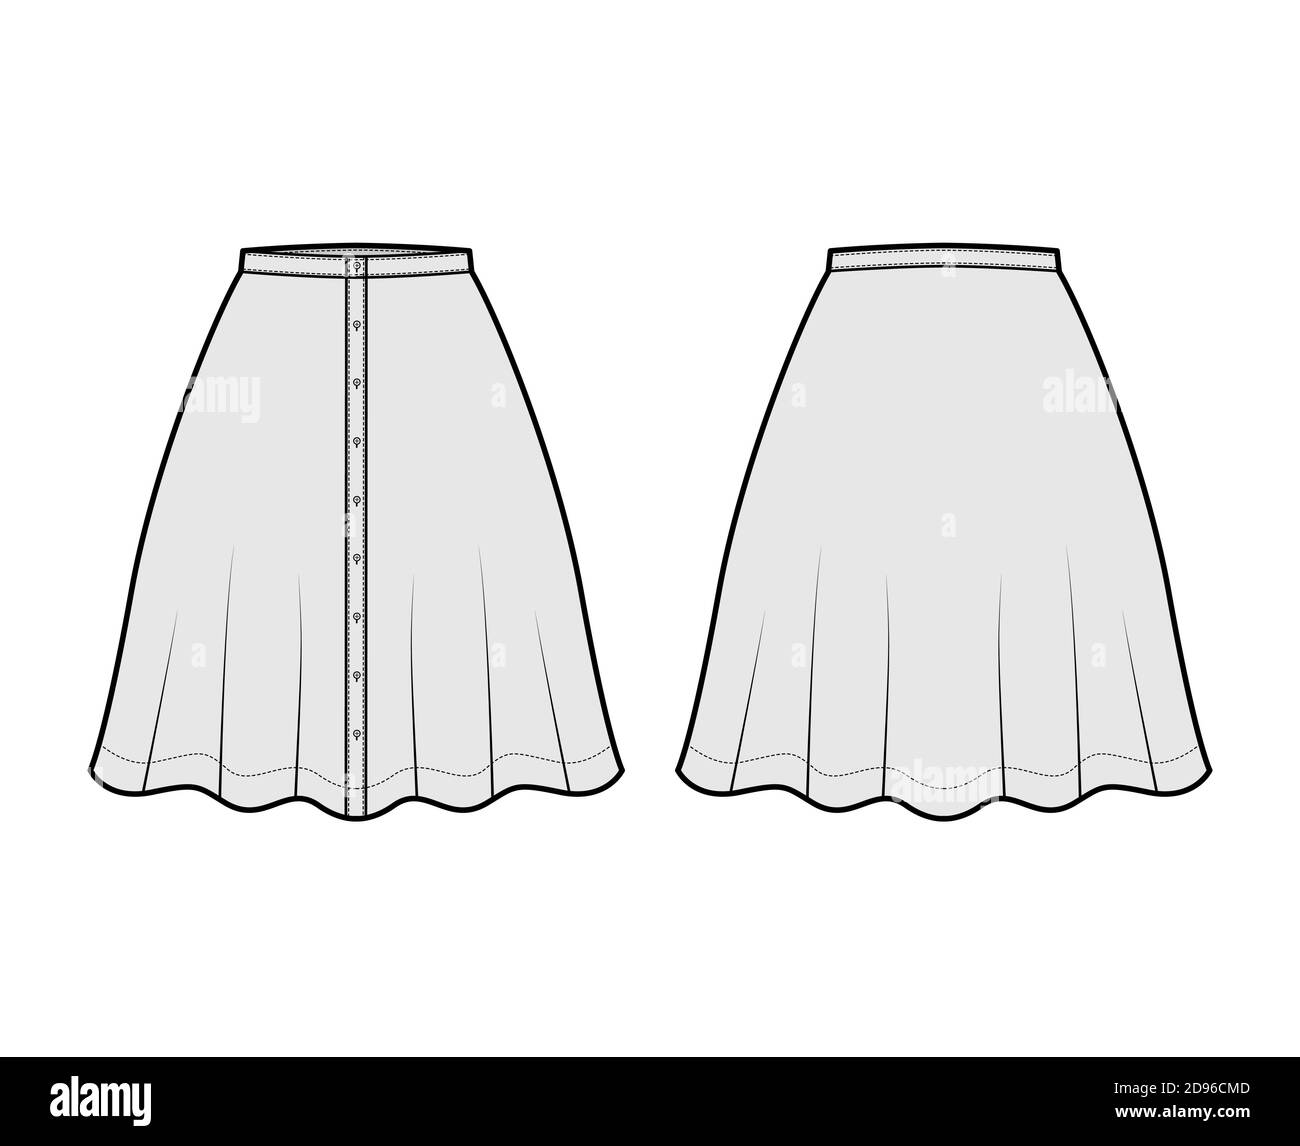 Skirt button down technical fashion illustration with semi-circular ...